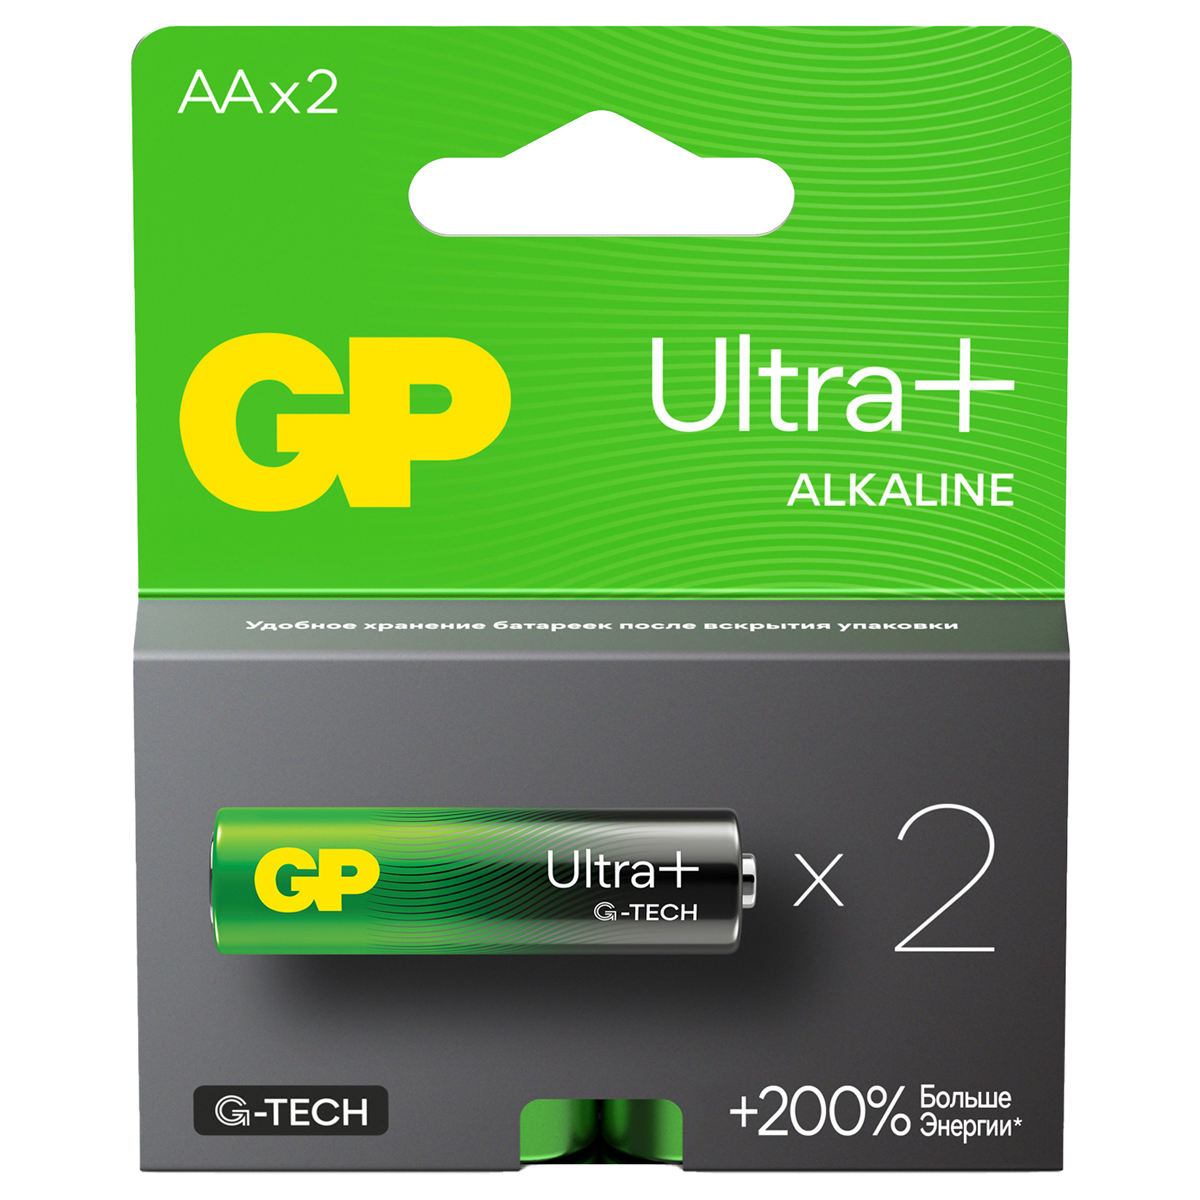 Батарейка GP Ultra Plus G-Tech AA (LR6) 15AUP алкалиновая, BC2